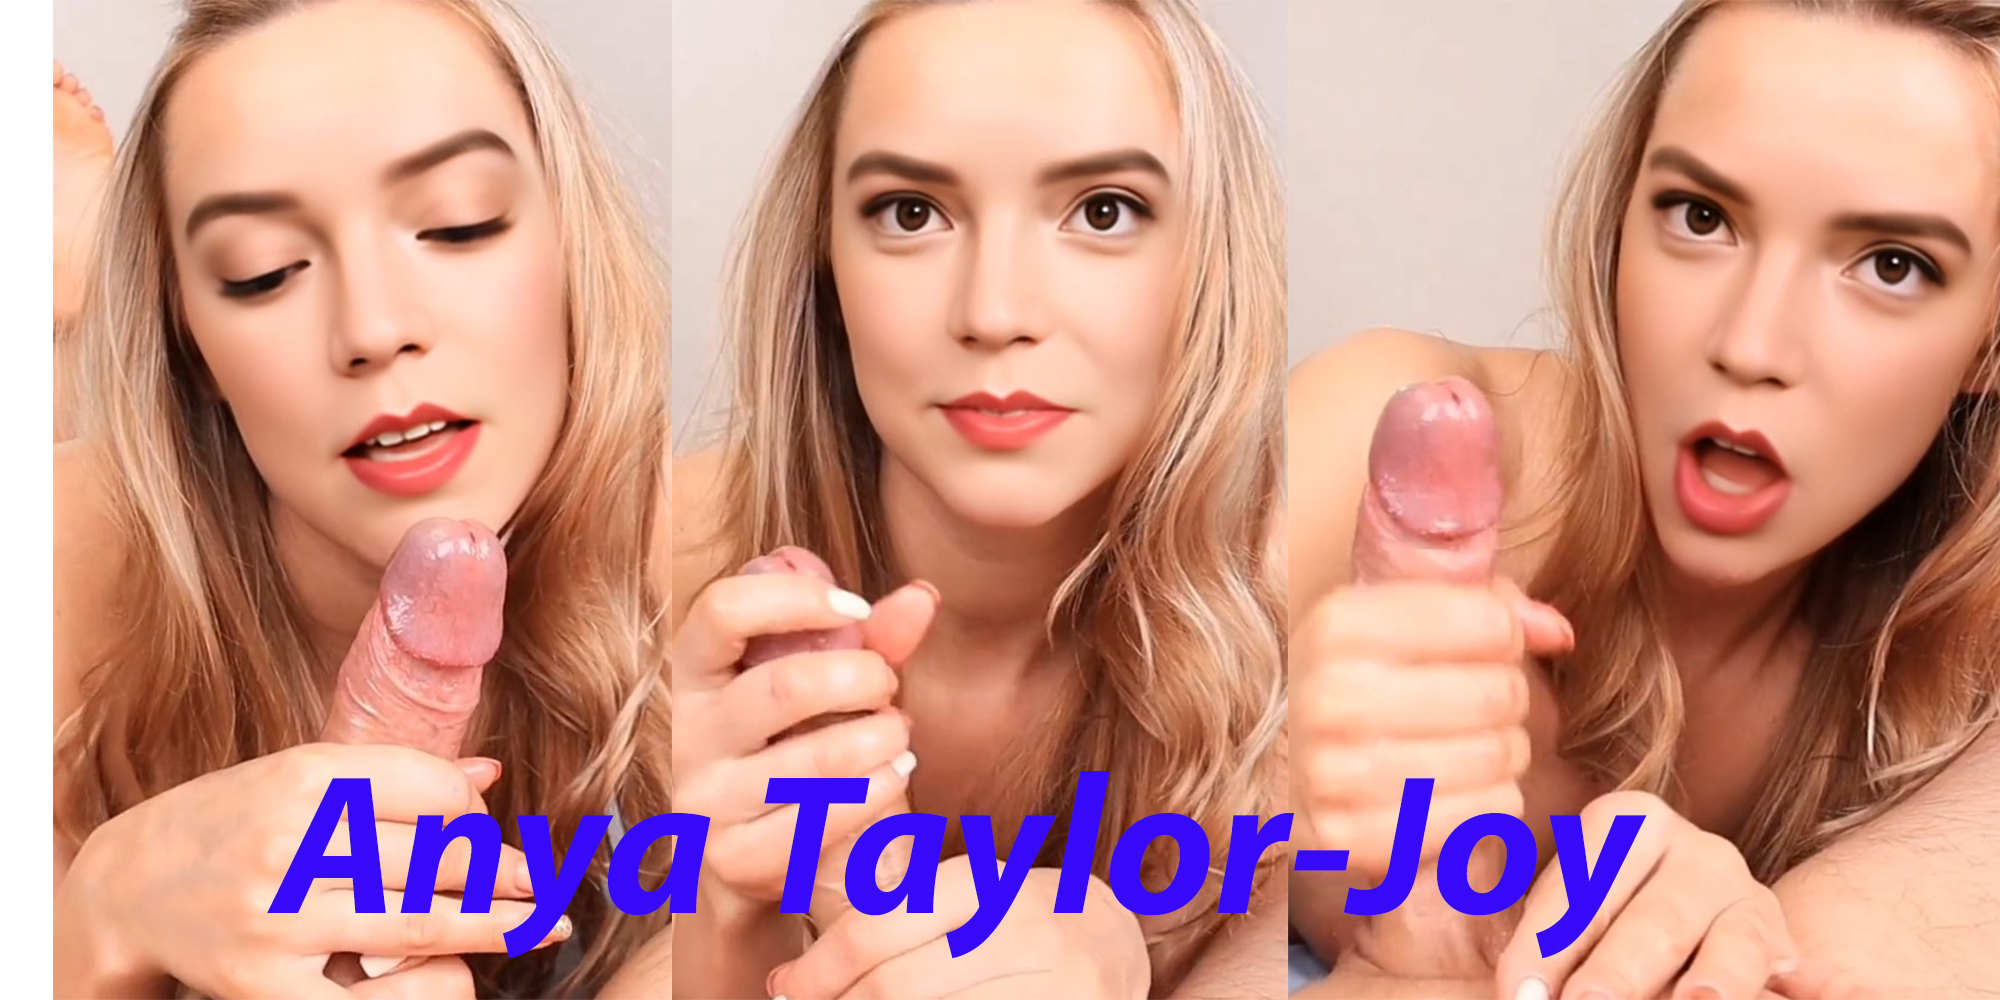 Anya Taylor Joy amazing teasing and blowjob (full version)